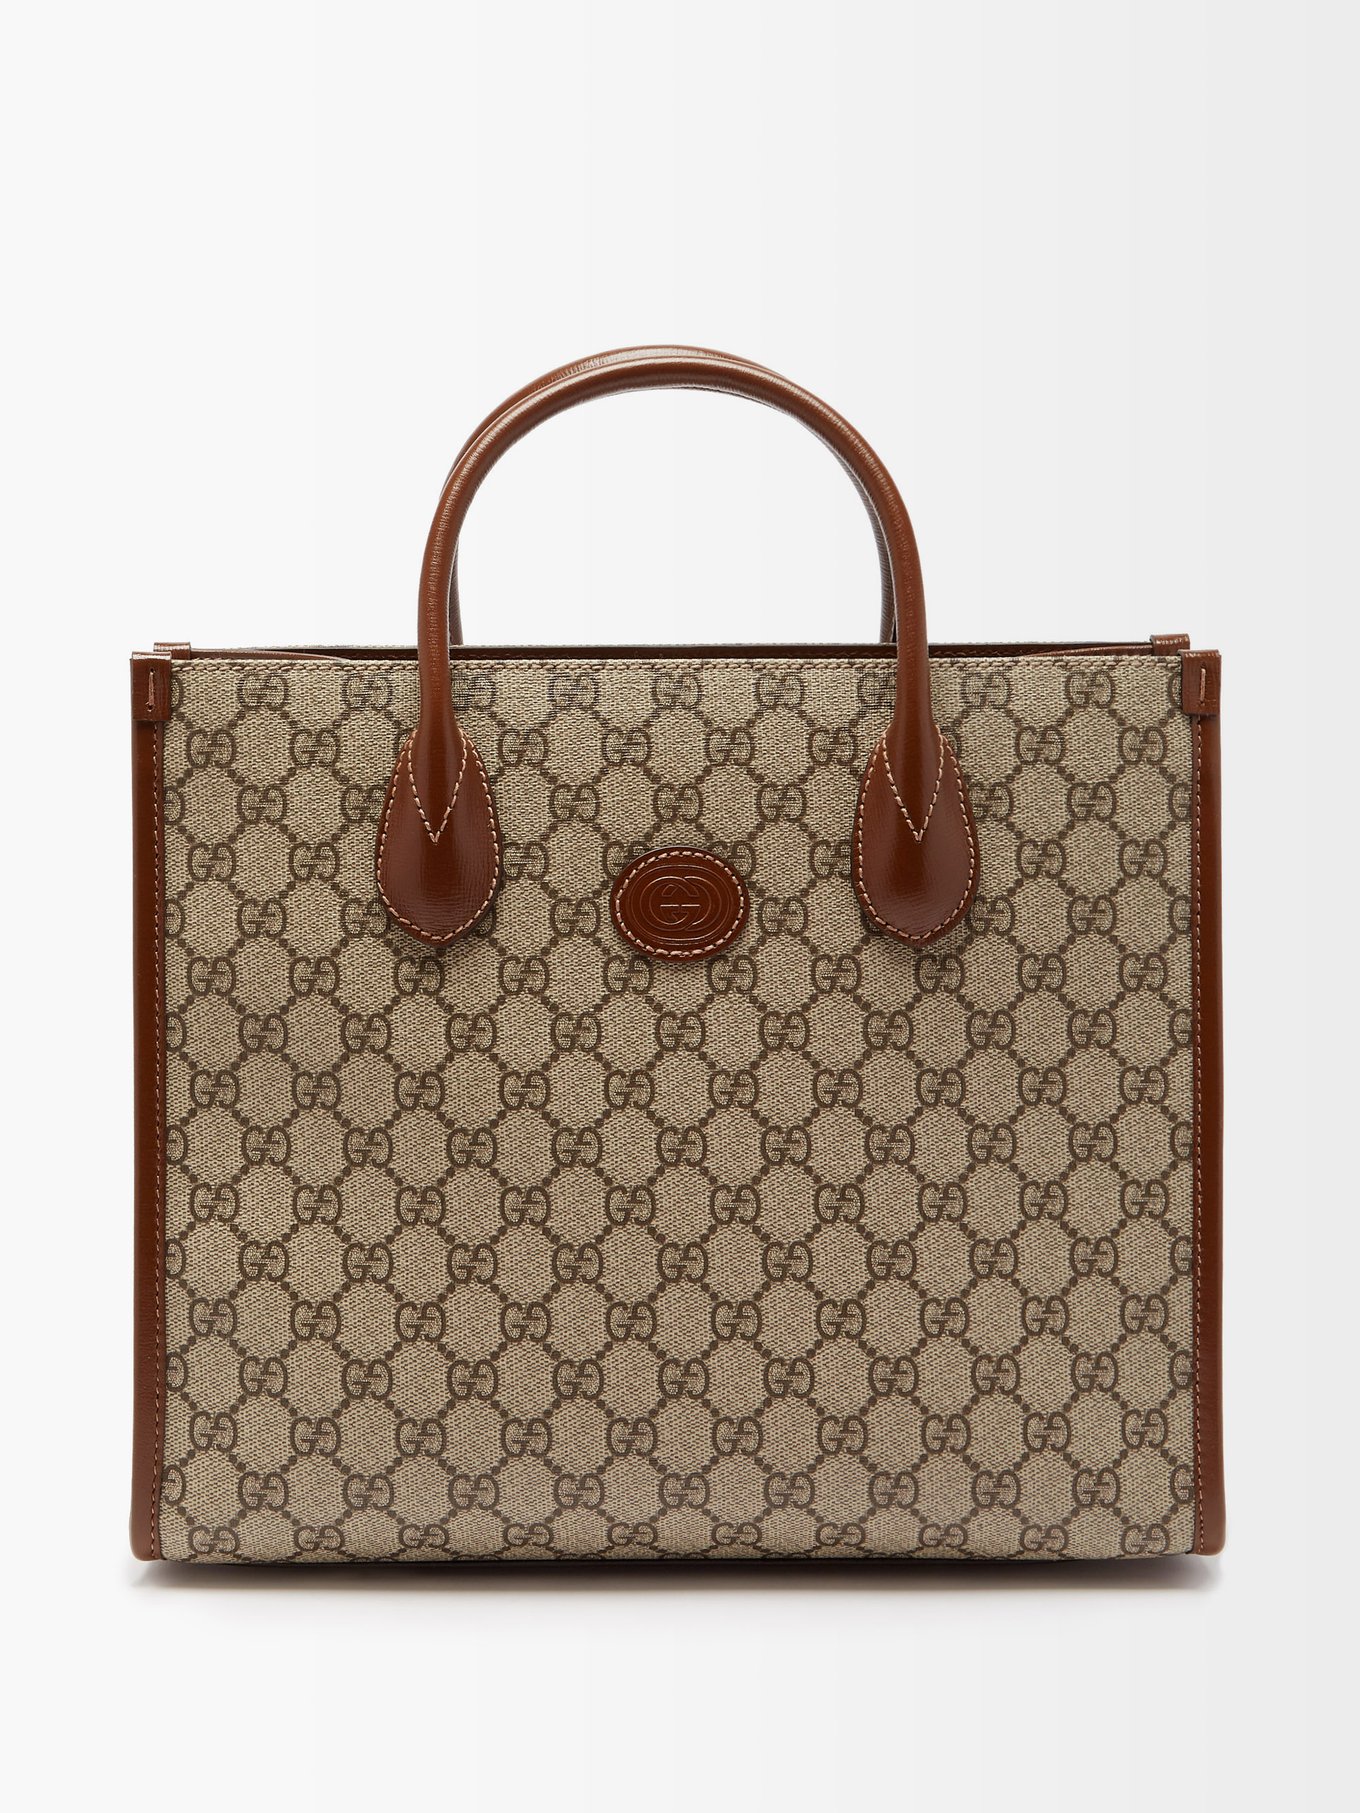 Gucci - GG-Jacquard Coated-Canvas Shoulder Bag - Mens - Brown